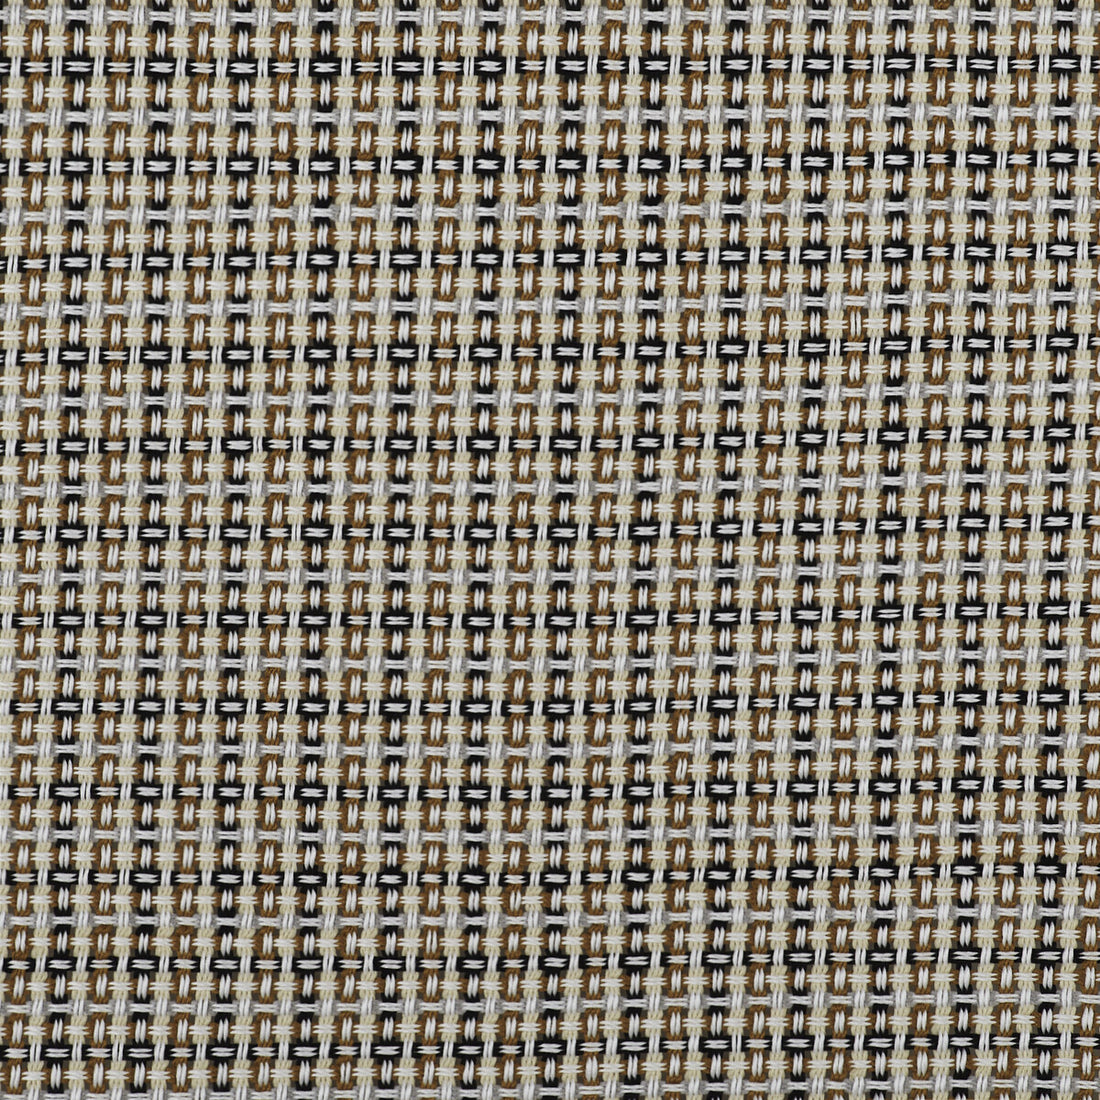 Kf Gyd fabric - pattern LCT1006.002.0 - by Gaston y Daniela in the Lorenzo Castillo V collection